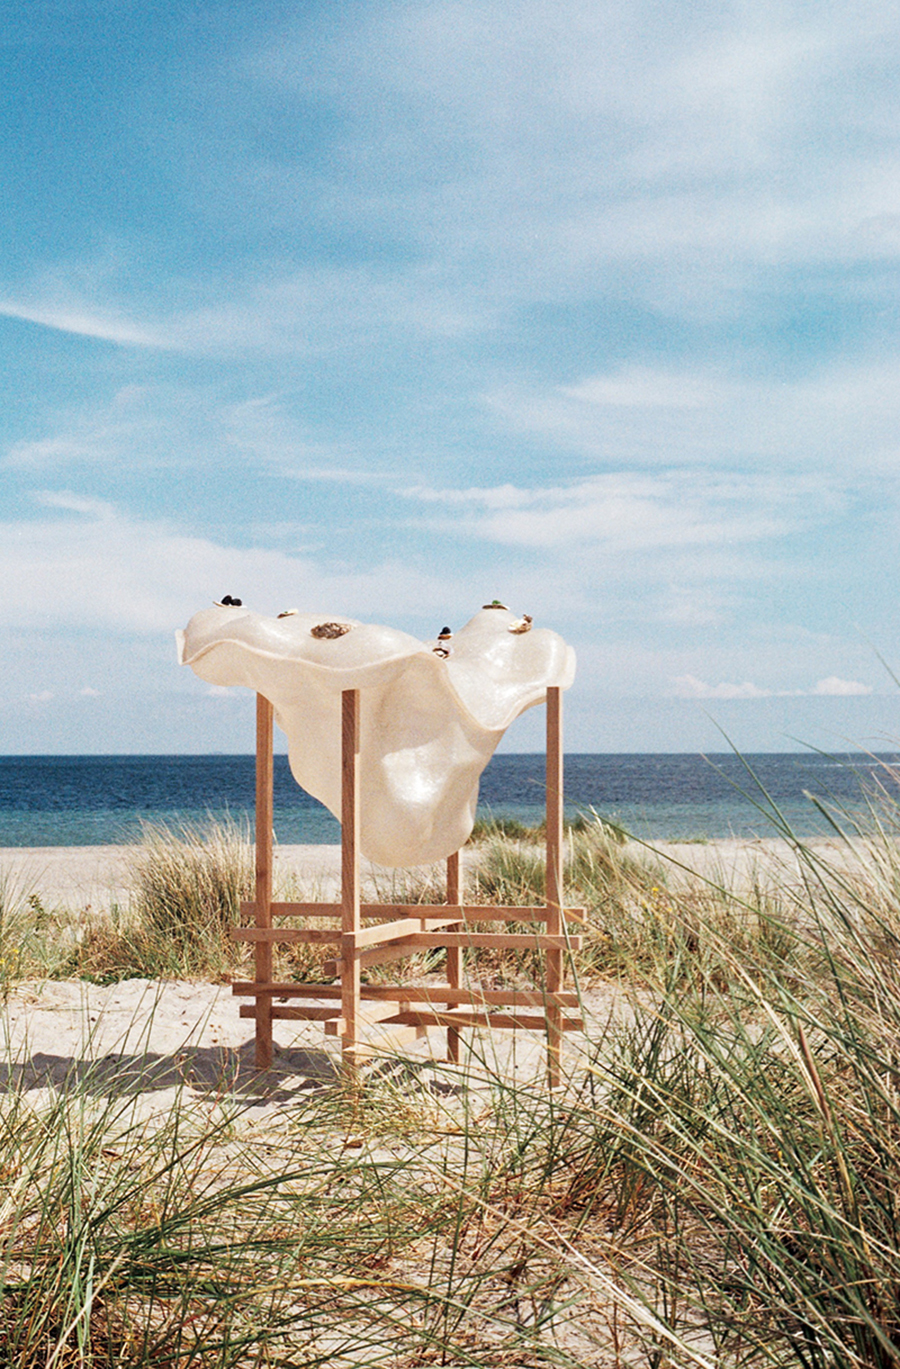 furniture and beach